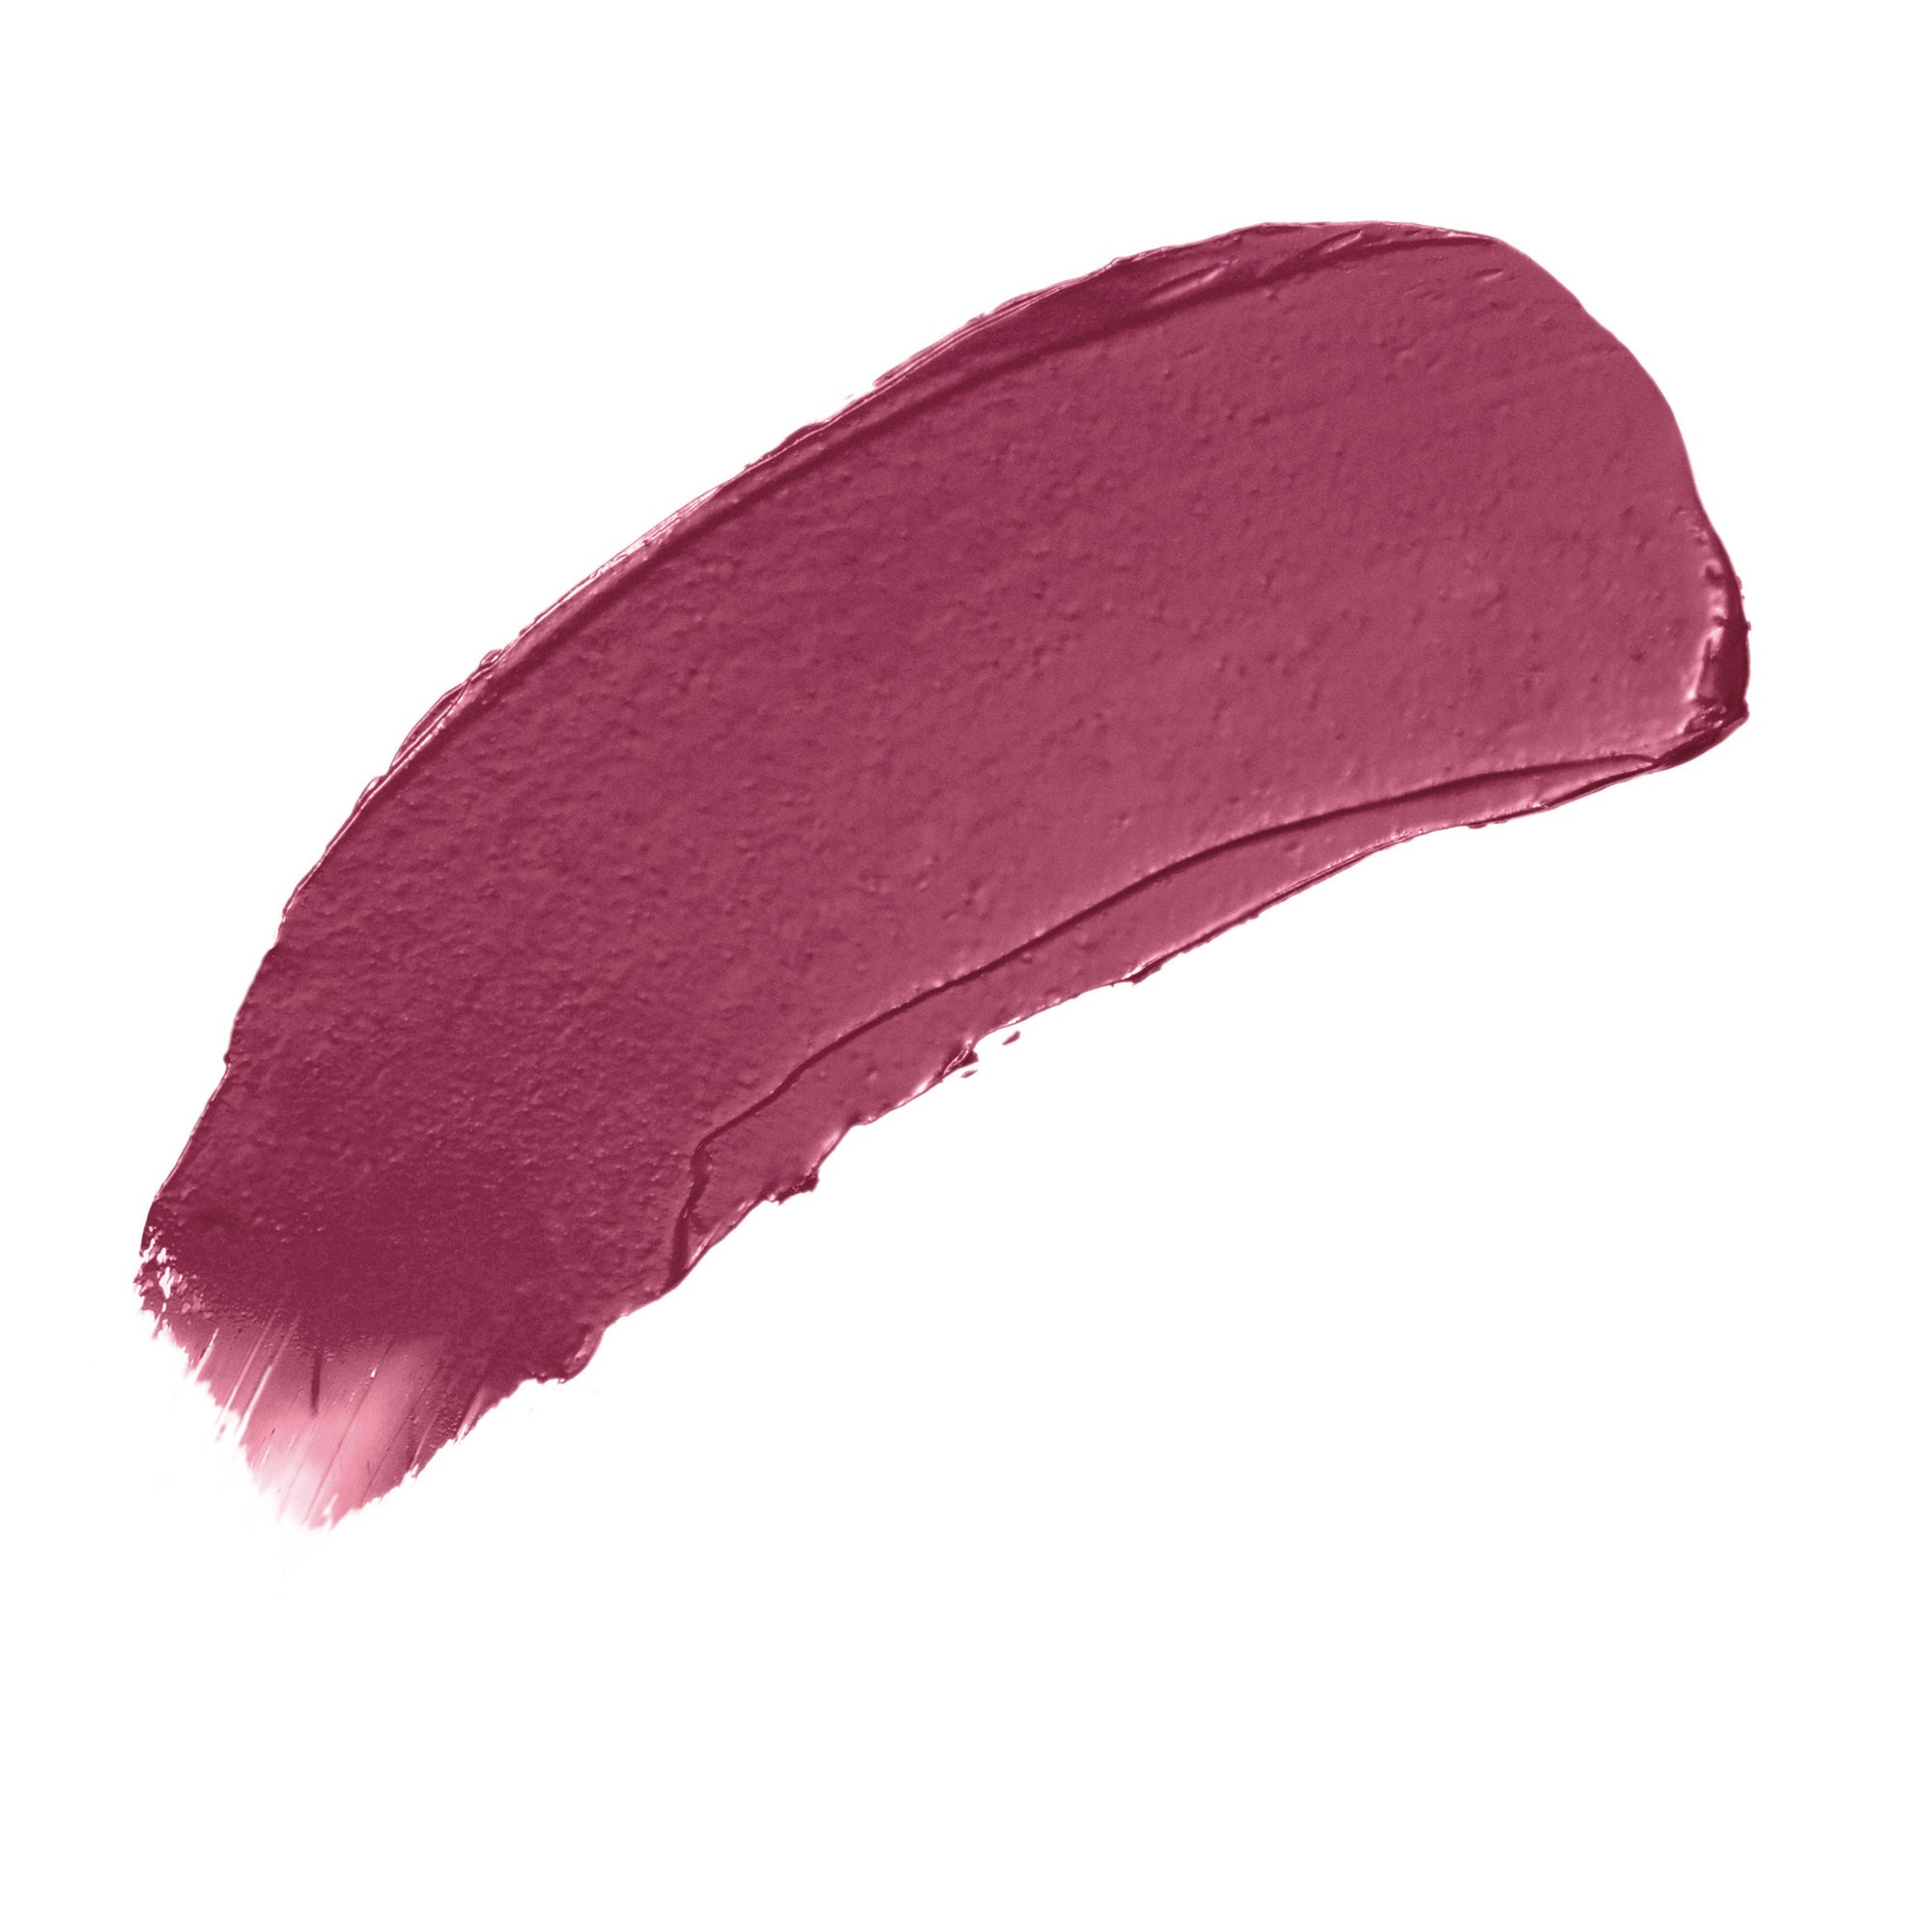 Jane Iredale Triple Luxe Long Lasting Naturally Moist Lipstick / JOANNA / Swatch